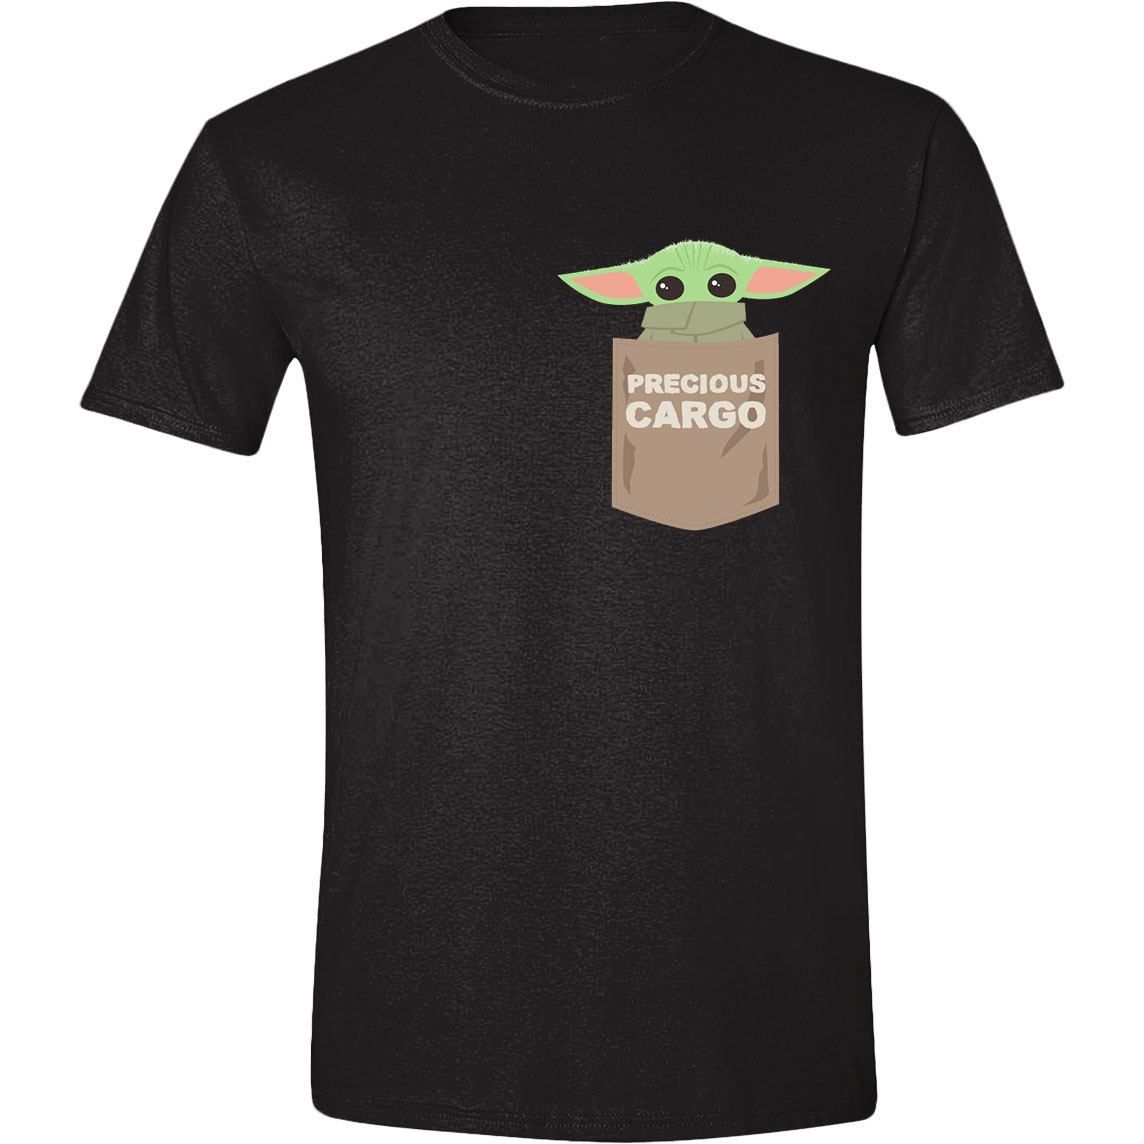 Star Wars The Mandalorian T-Shirt The Child Pocket Size XL PCMerch